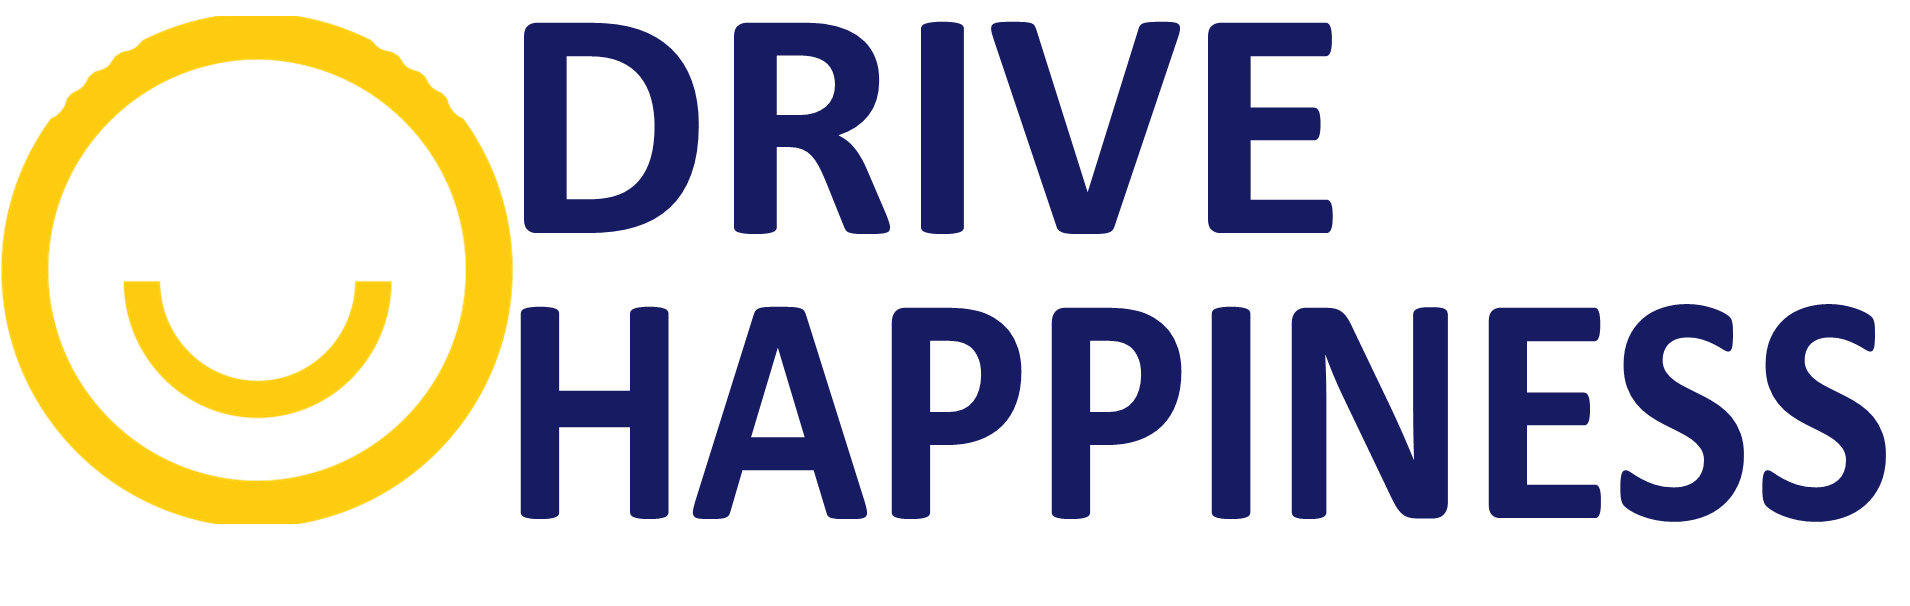 Drive Happiness logo